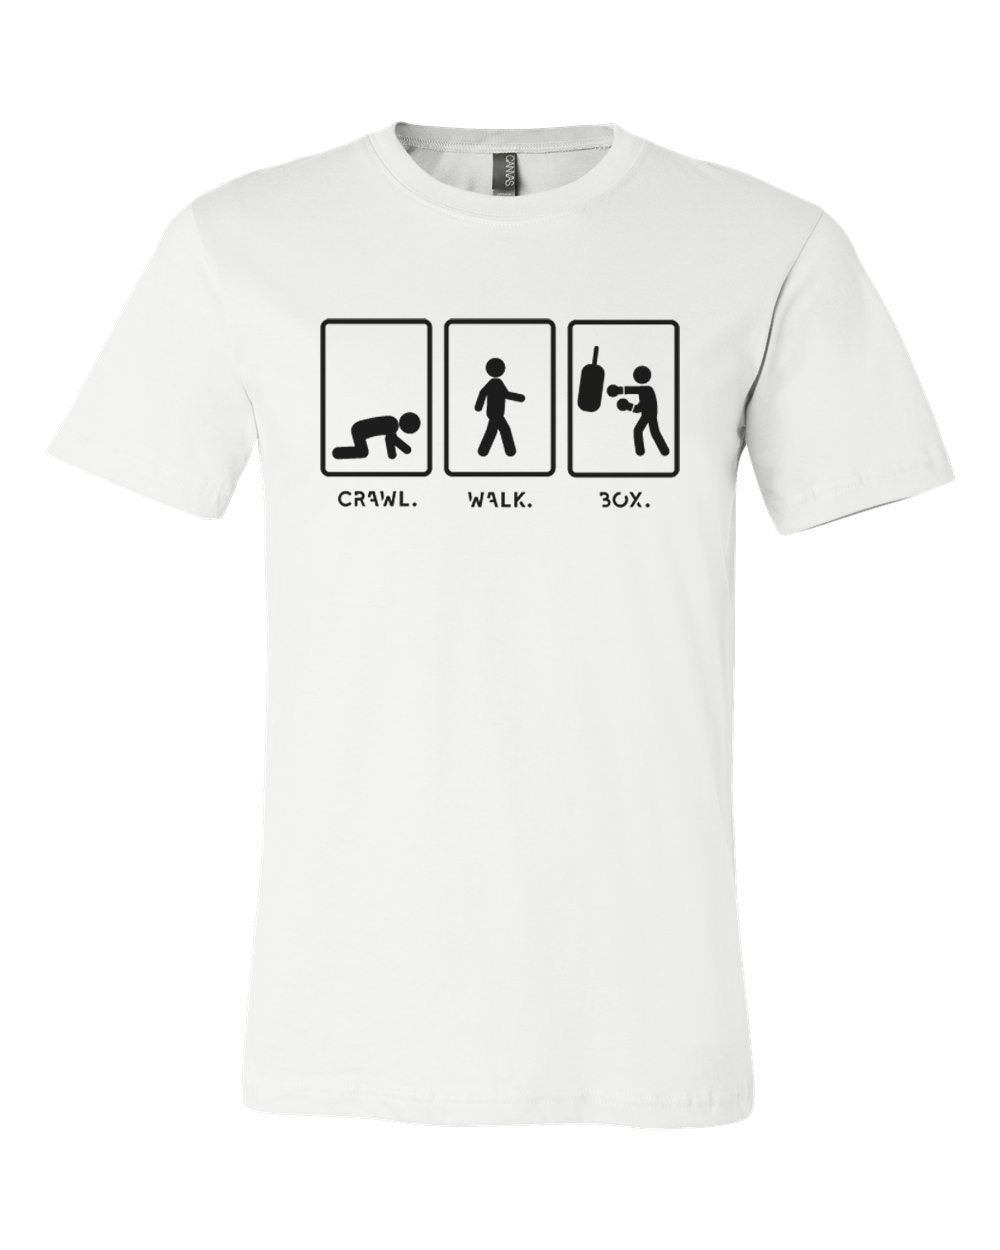 Boxing Shirt Crawl Walk Box Boxer Shirt Kickboxing Tee | Etsy